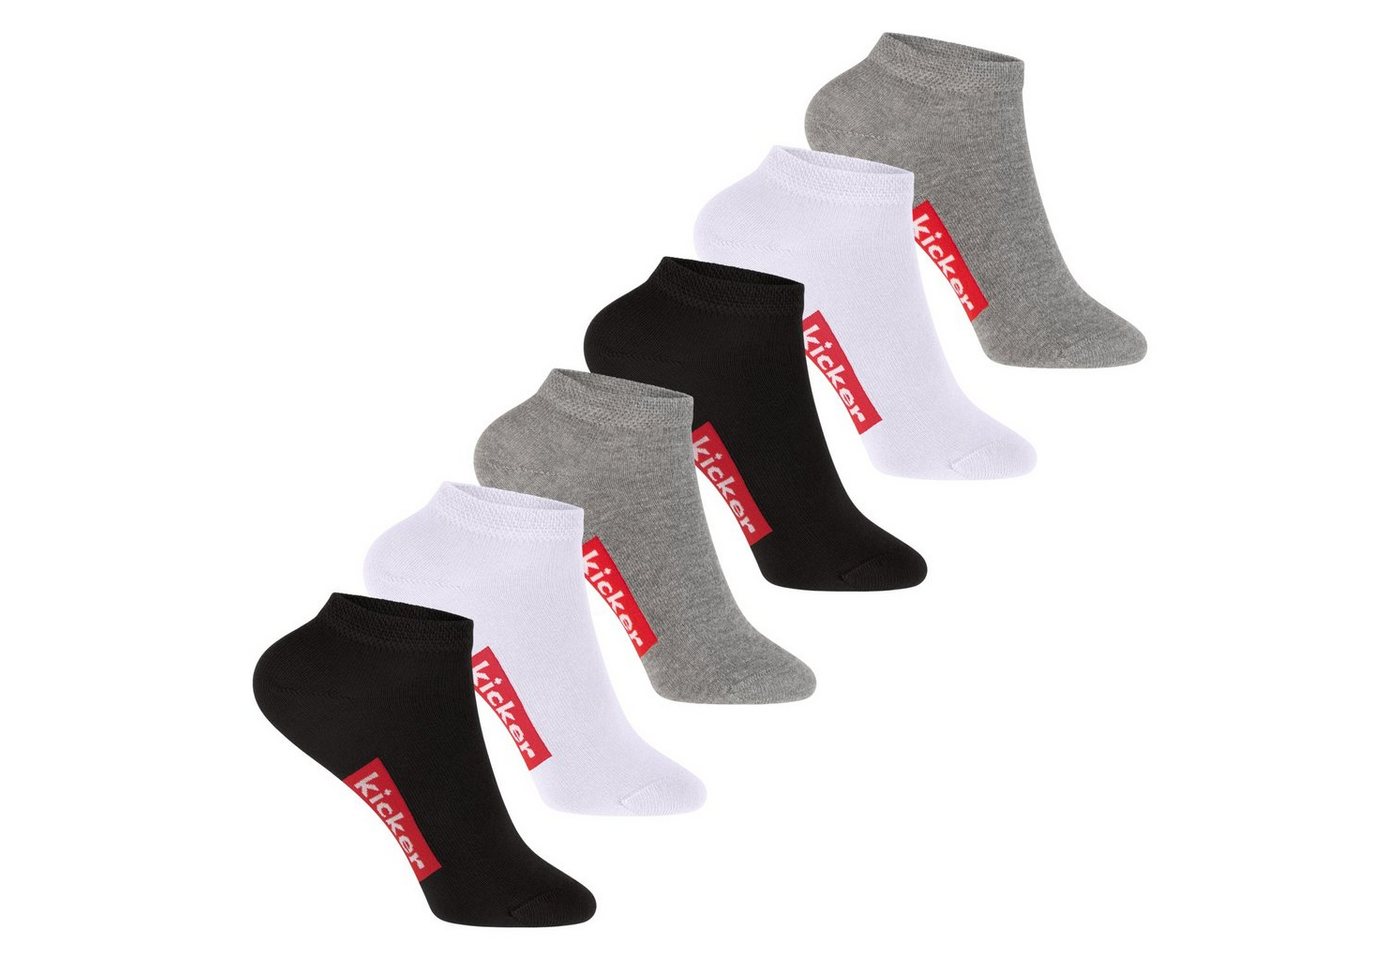 Kicker Kurzsocken kicker Kinder Sneaker Socken (6 Paar) Schwarz Weiß Grau 27-30 von Kicker